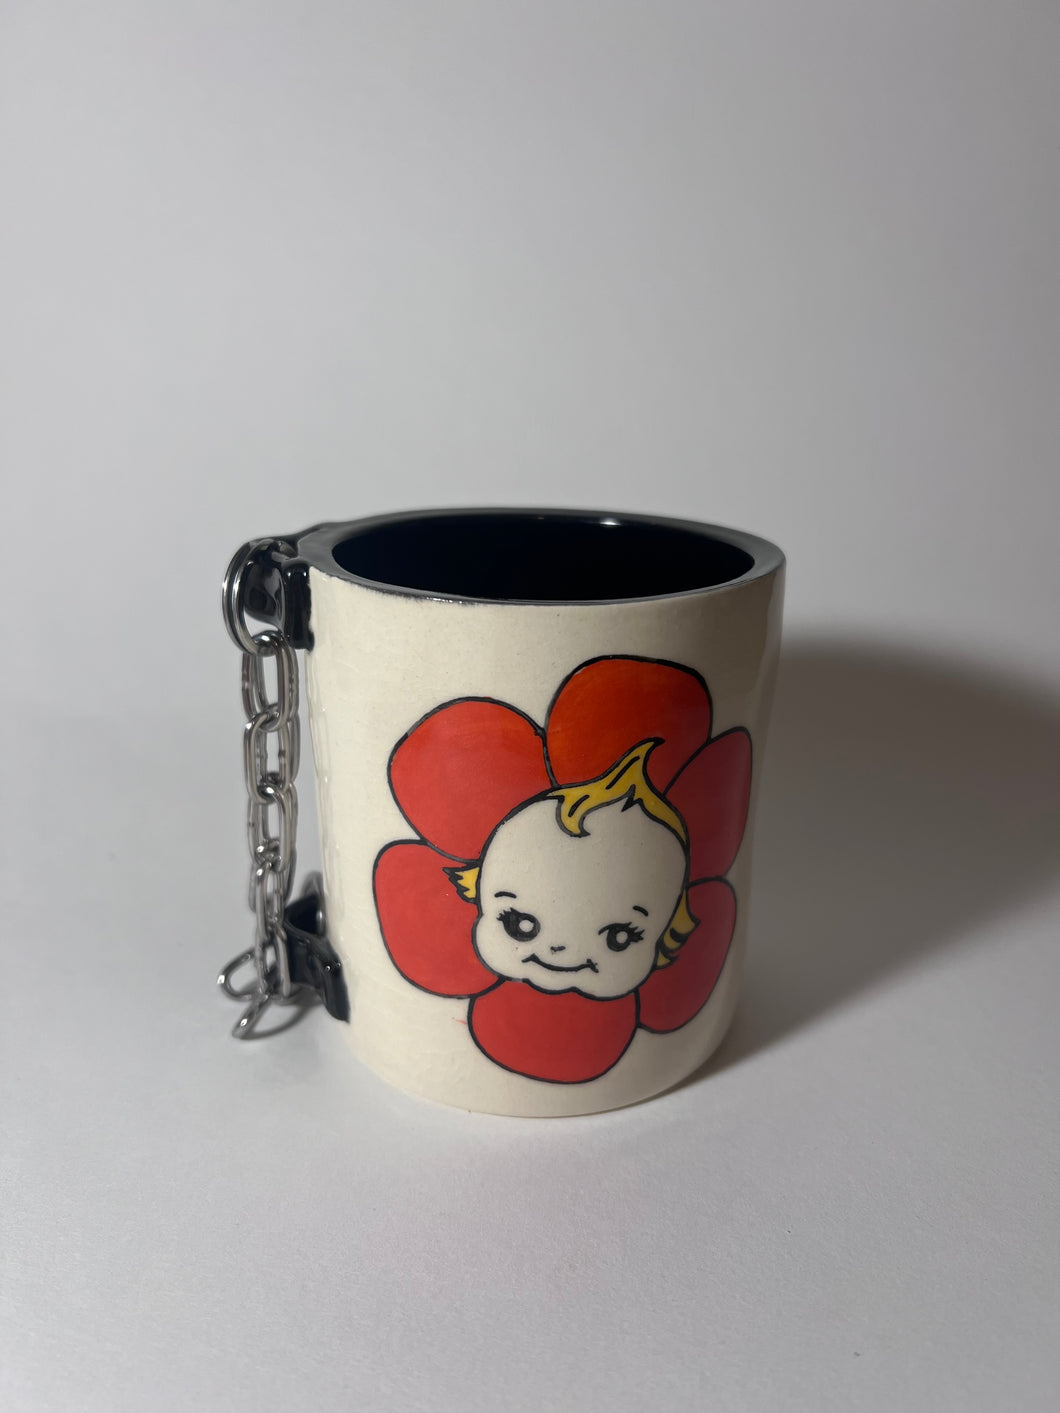 Flower kewpie chain mug (second)